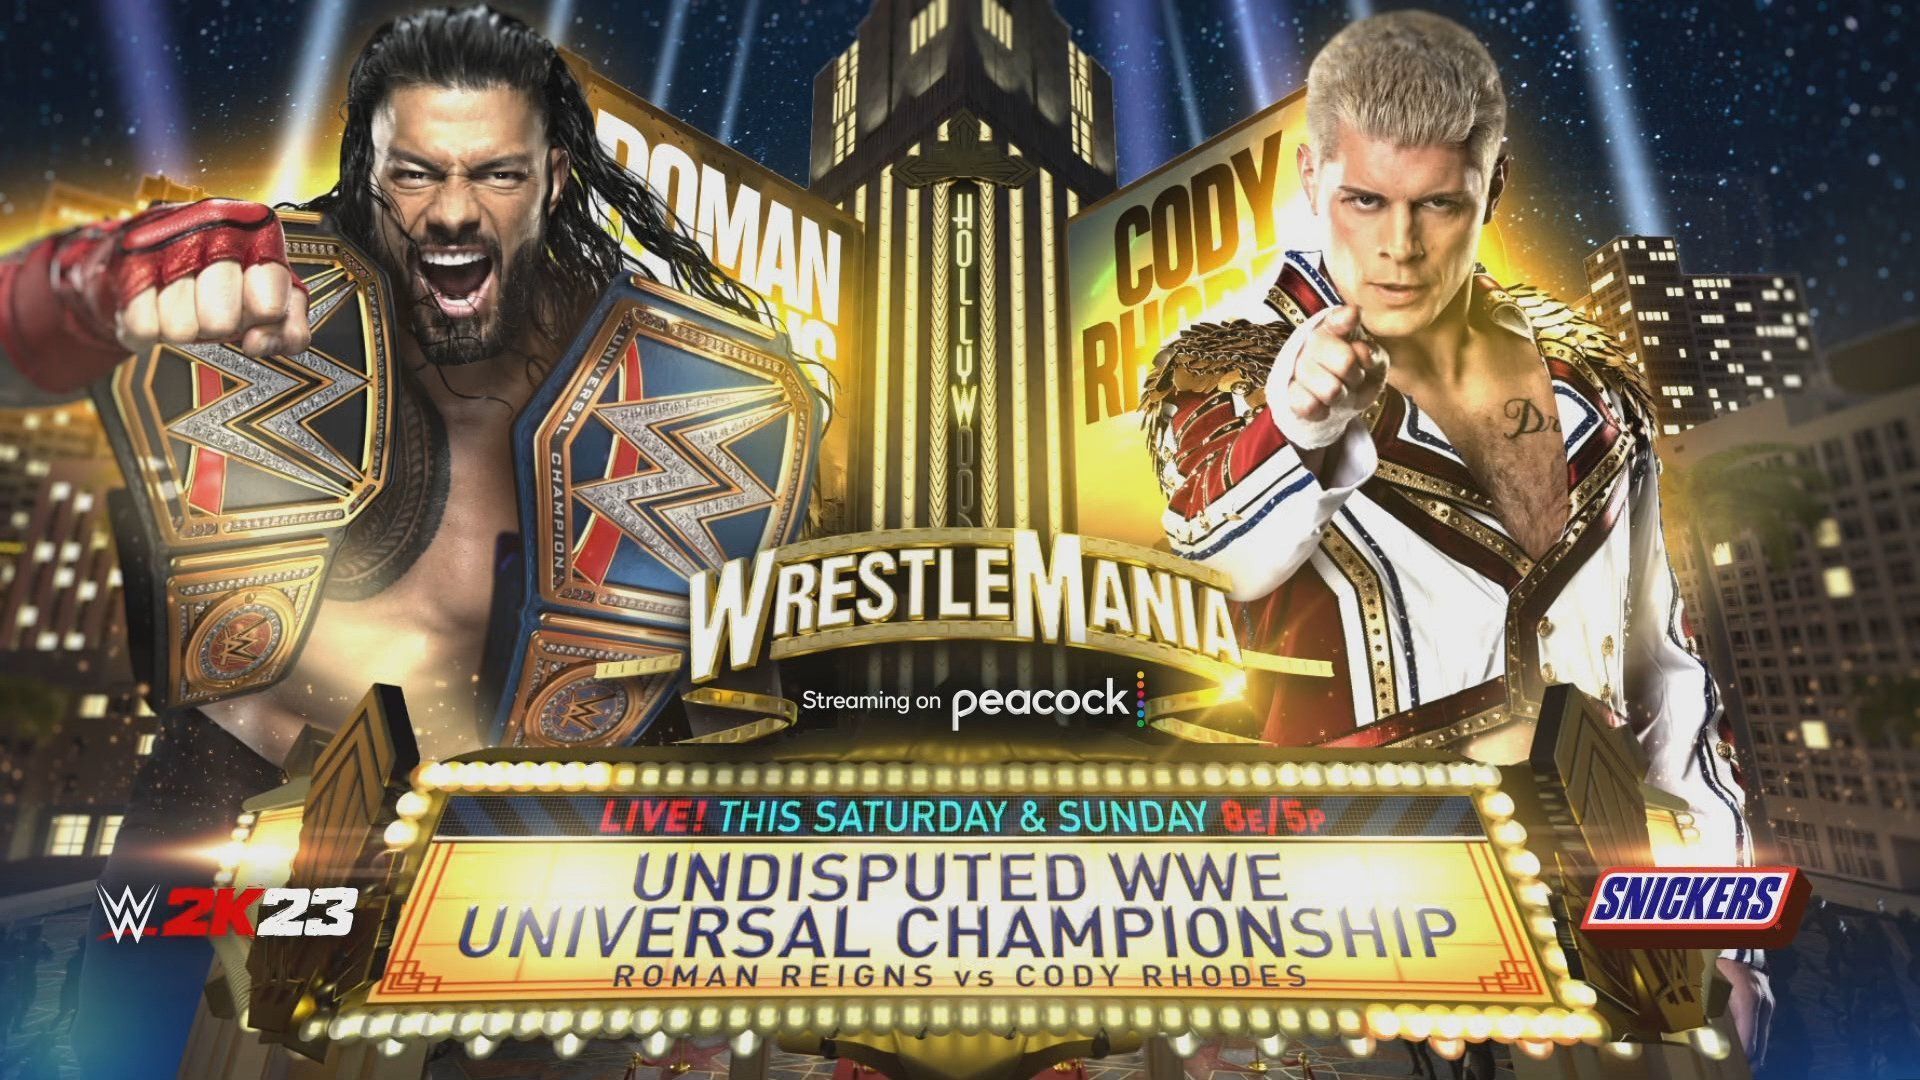 Roman Reigns will face Cody Rhodes